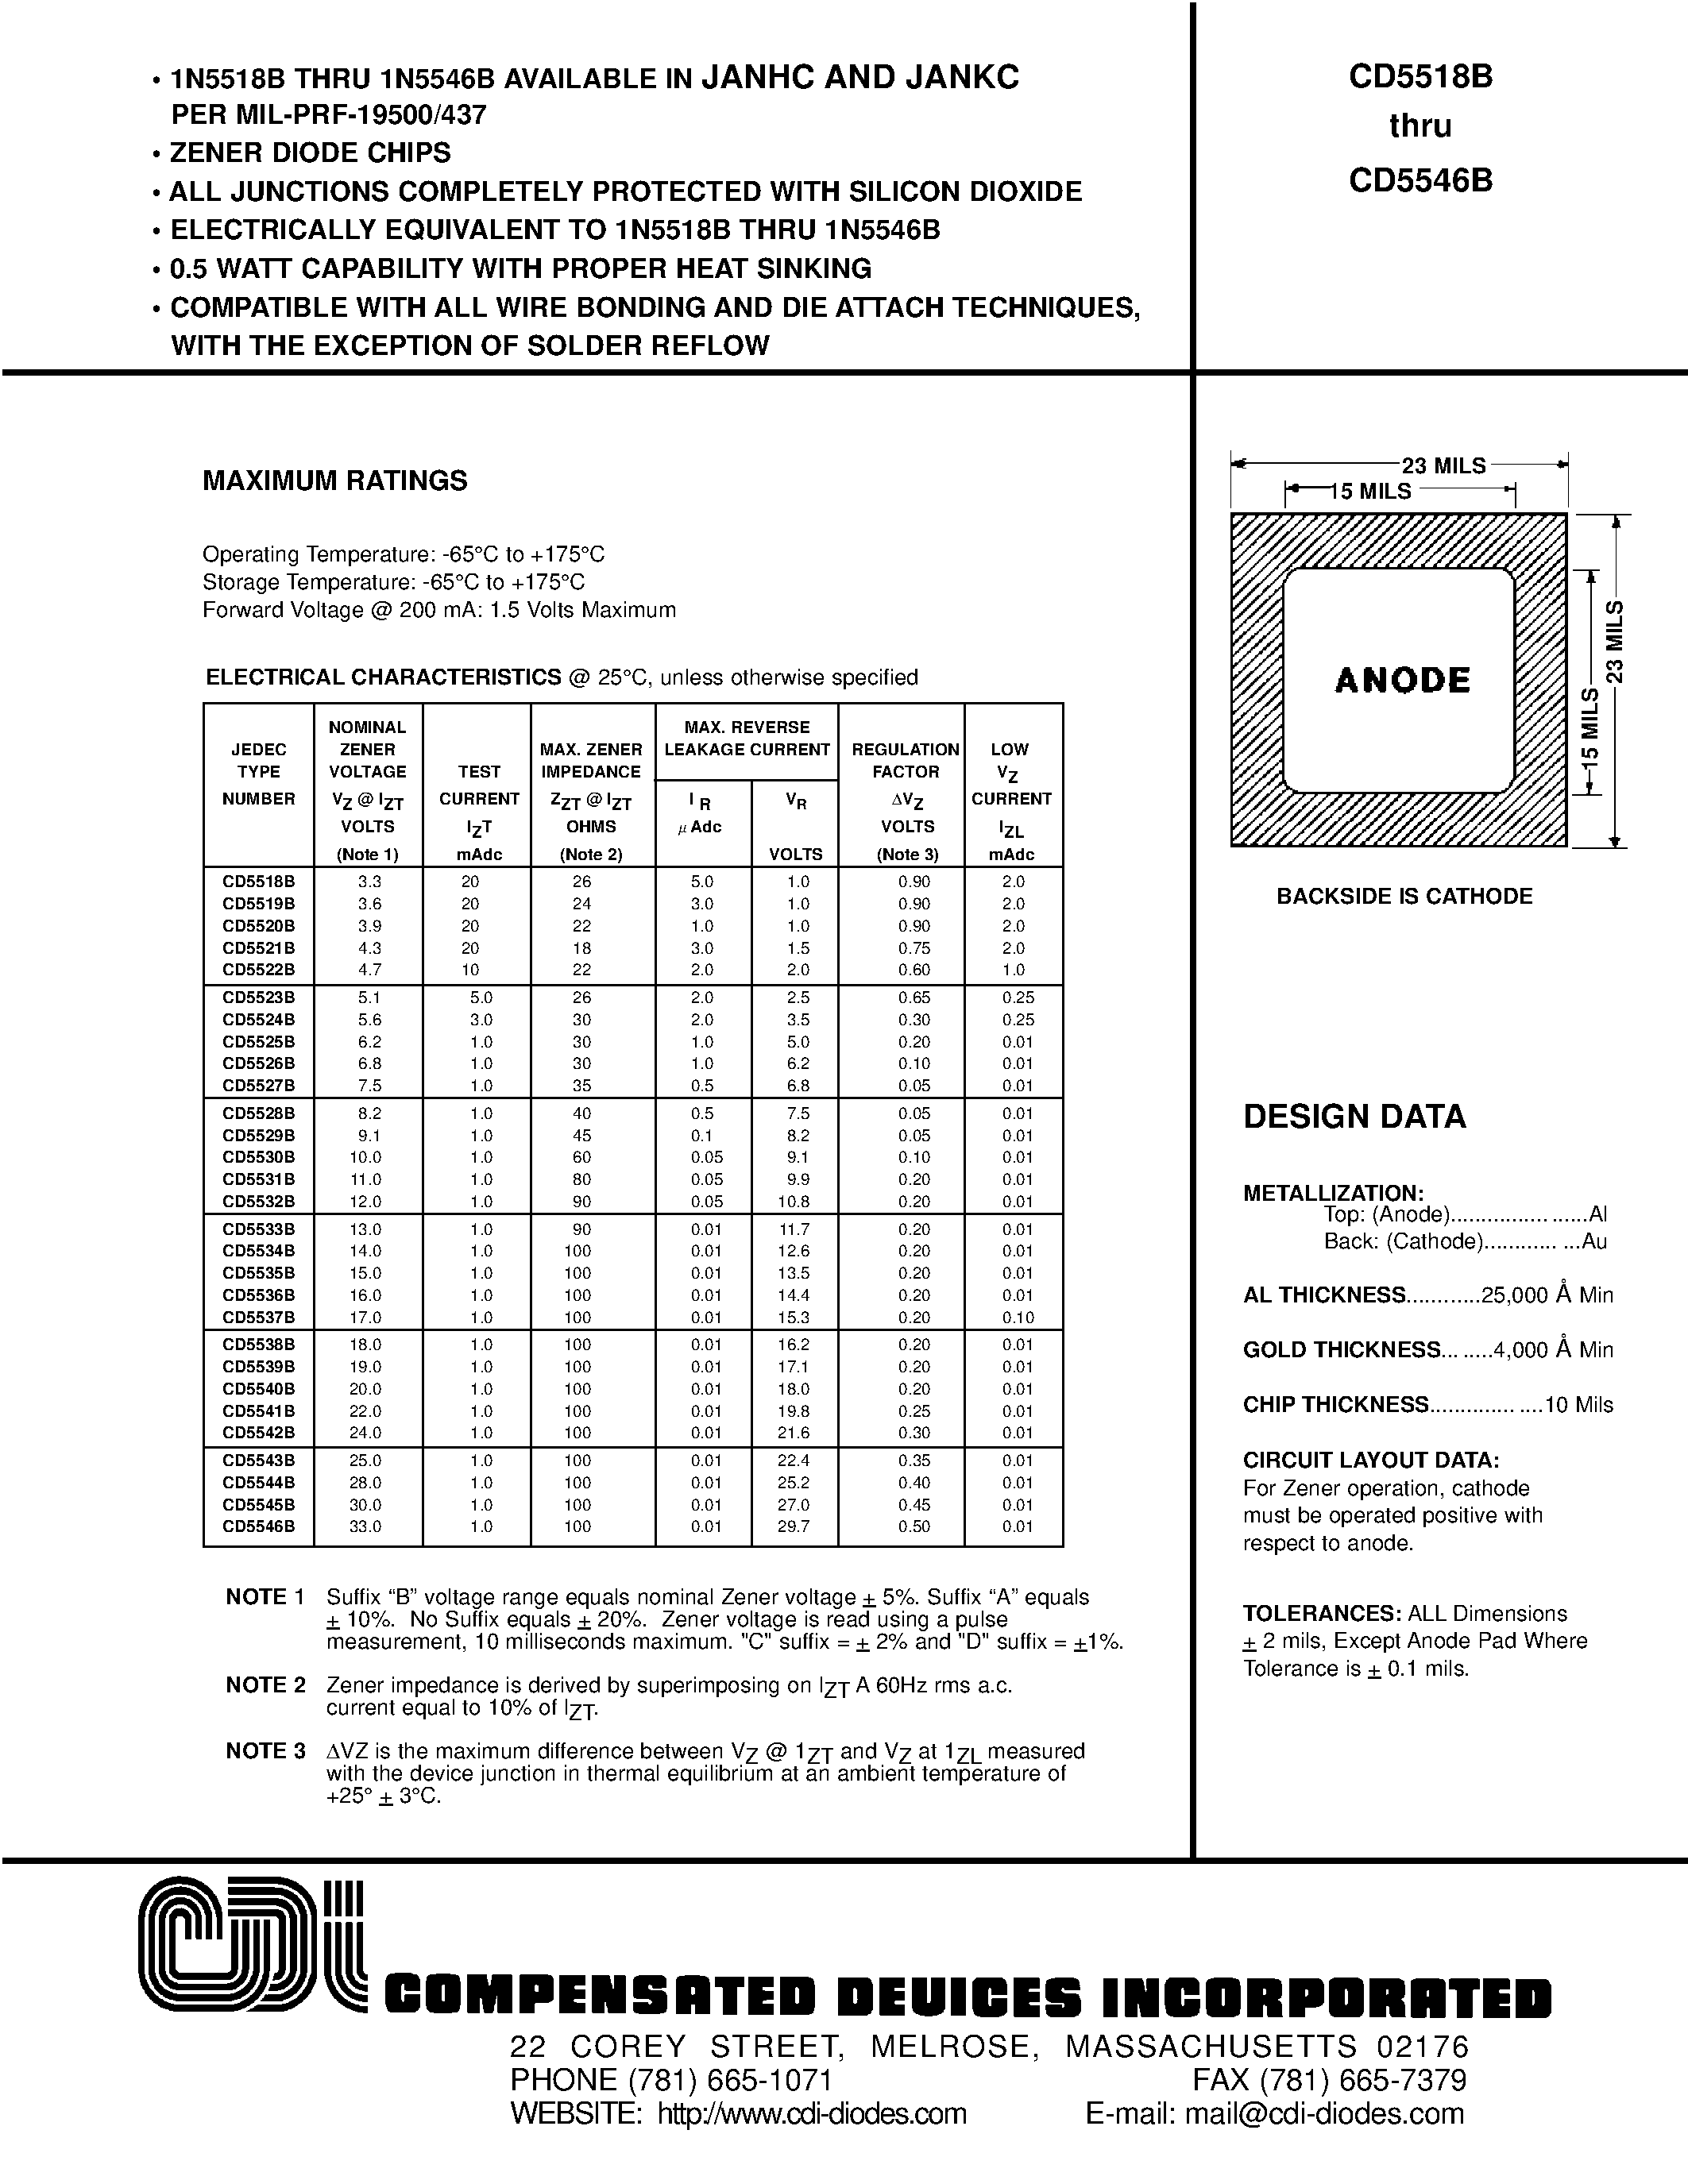 Datasheet CD5546B - ZENER DIODE CHIPS page 1